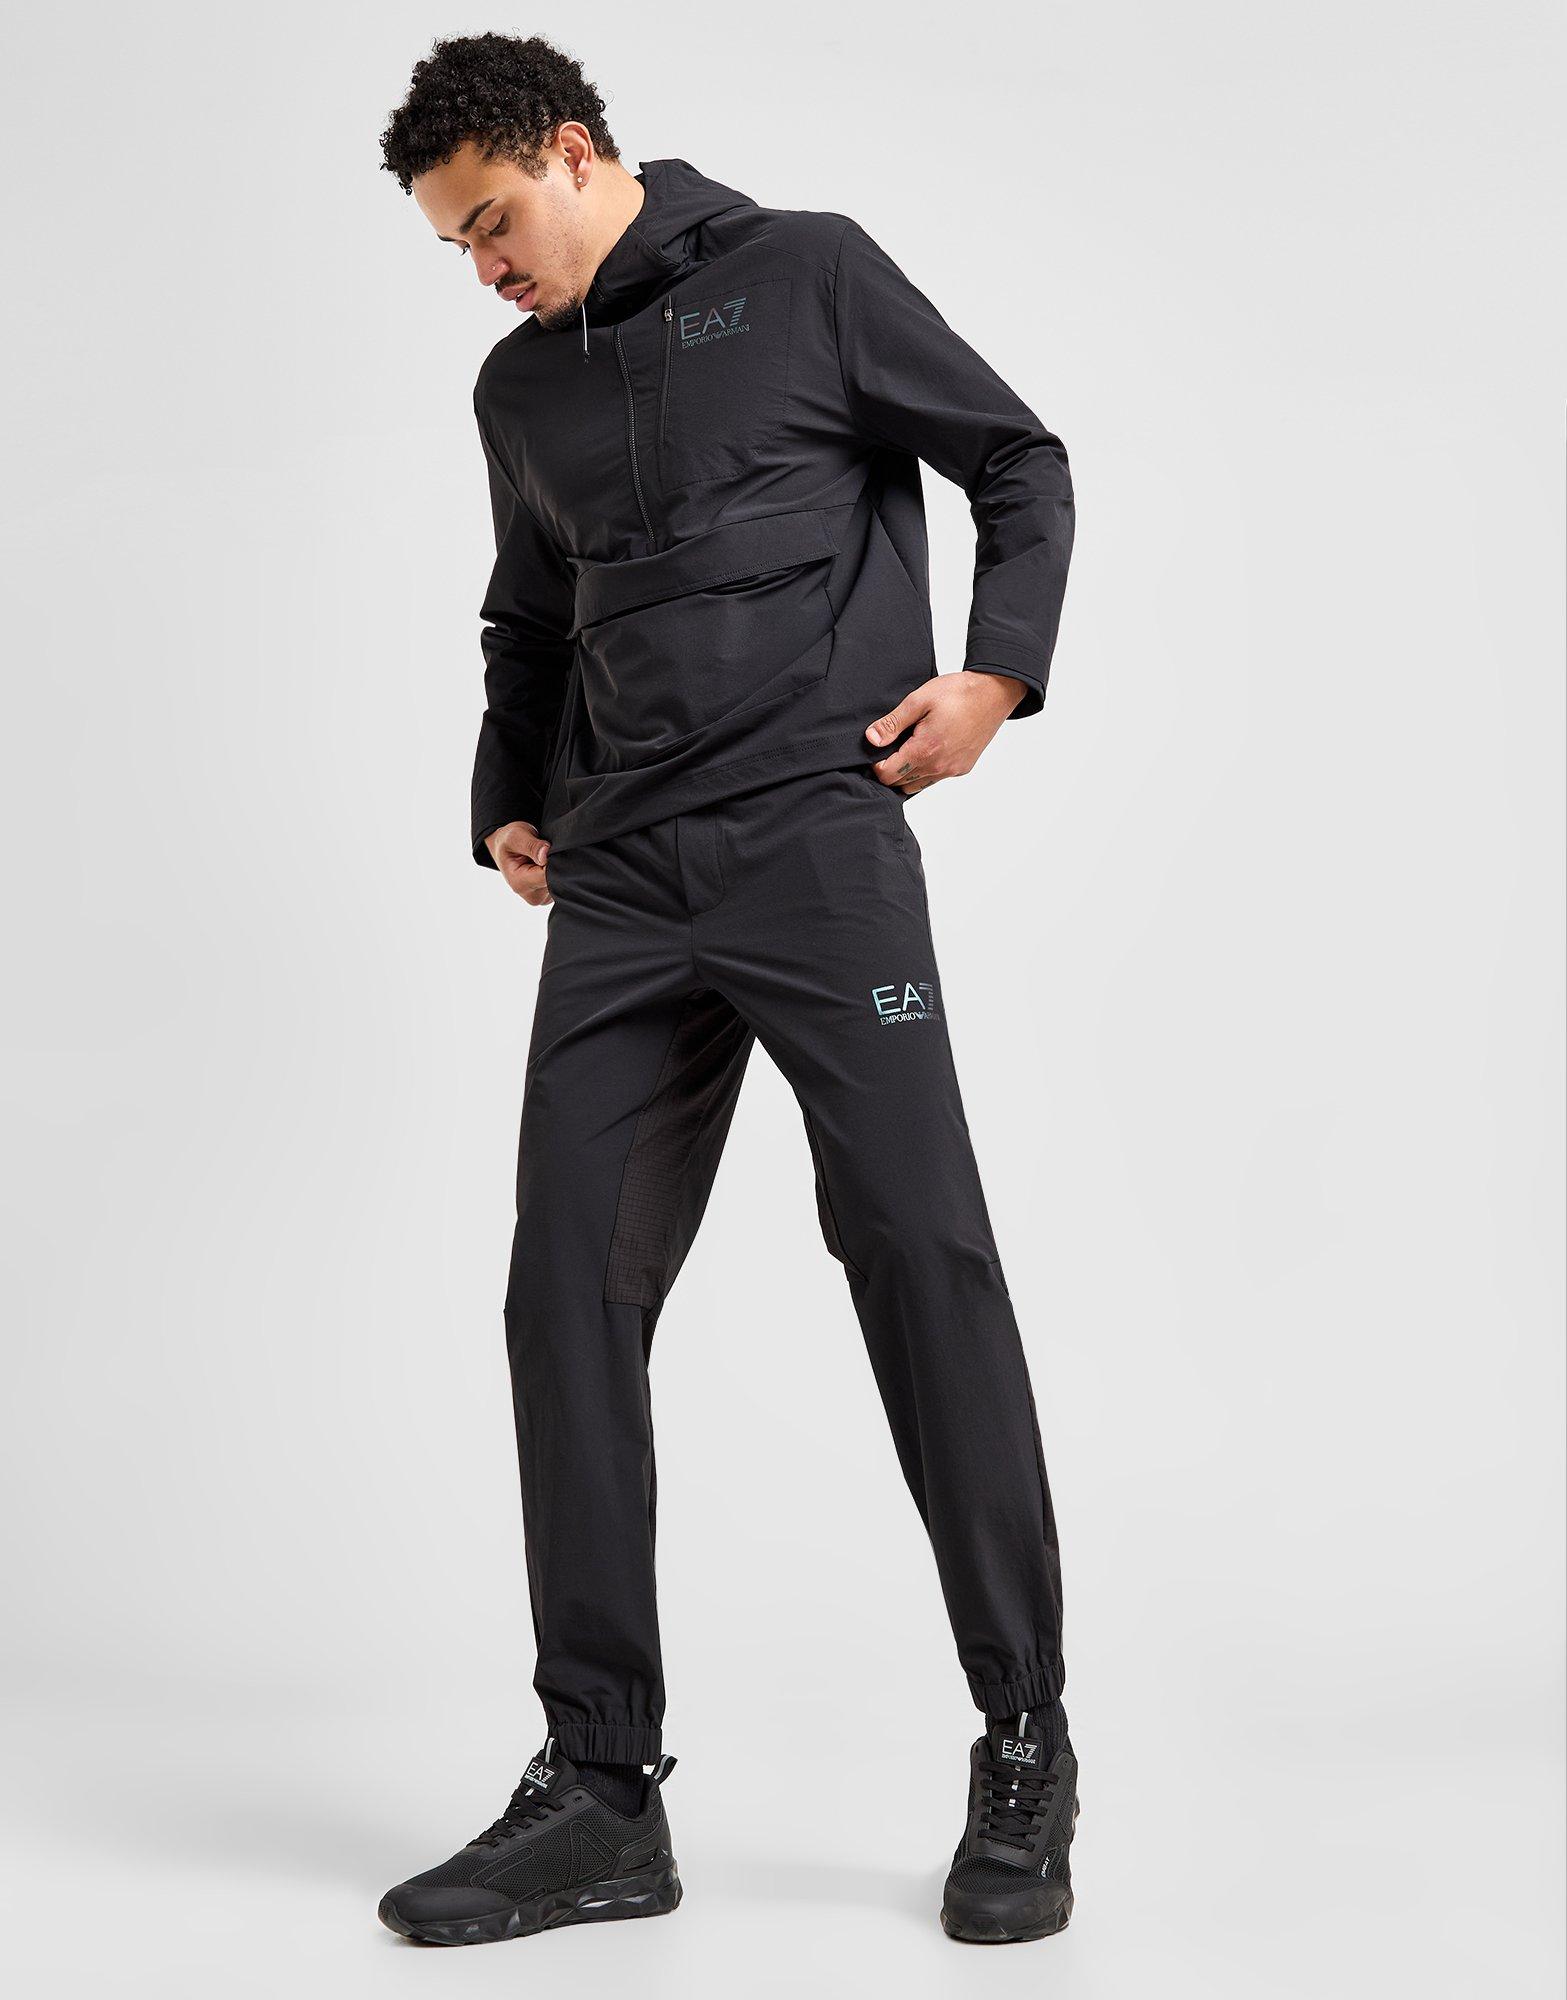 EA7 Emporio Armani Leggings - Trousers - fancy black/black 